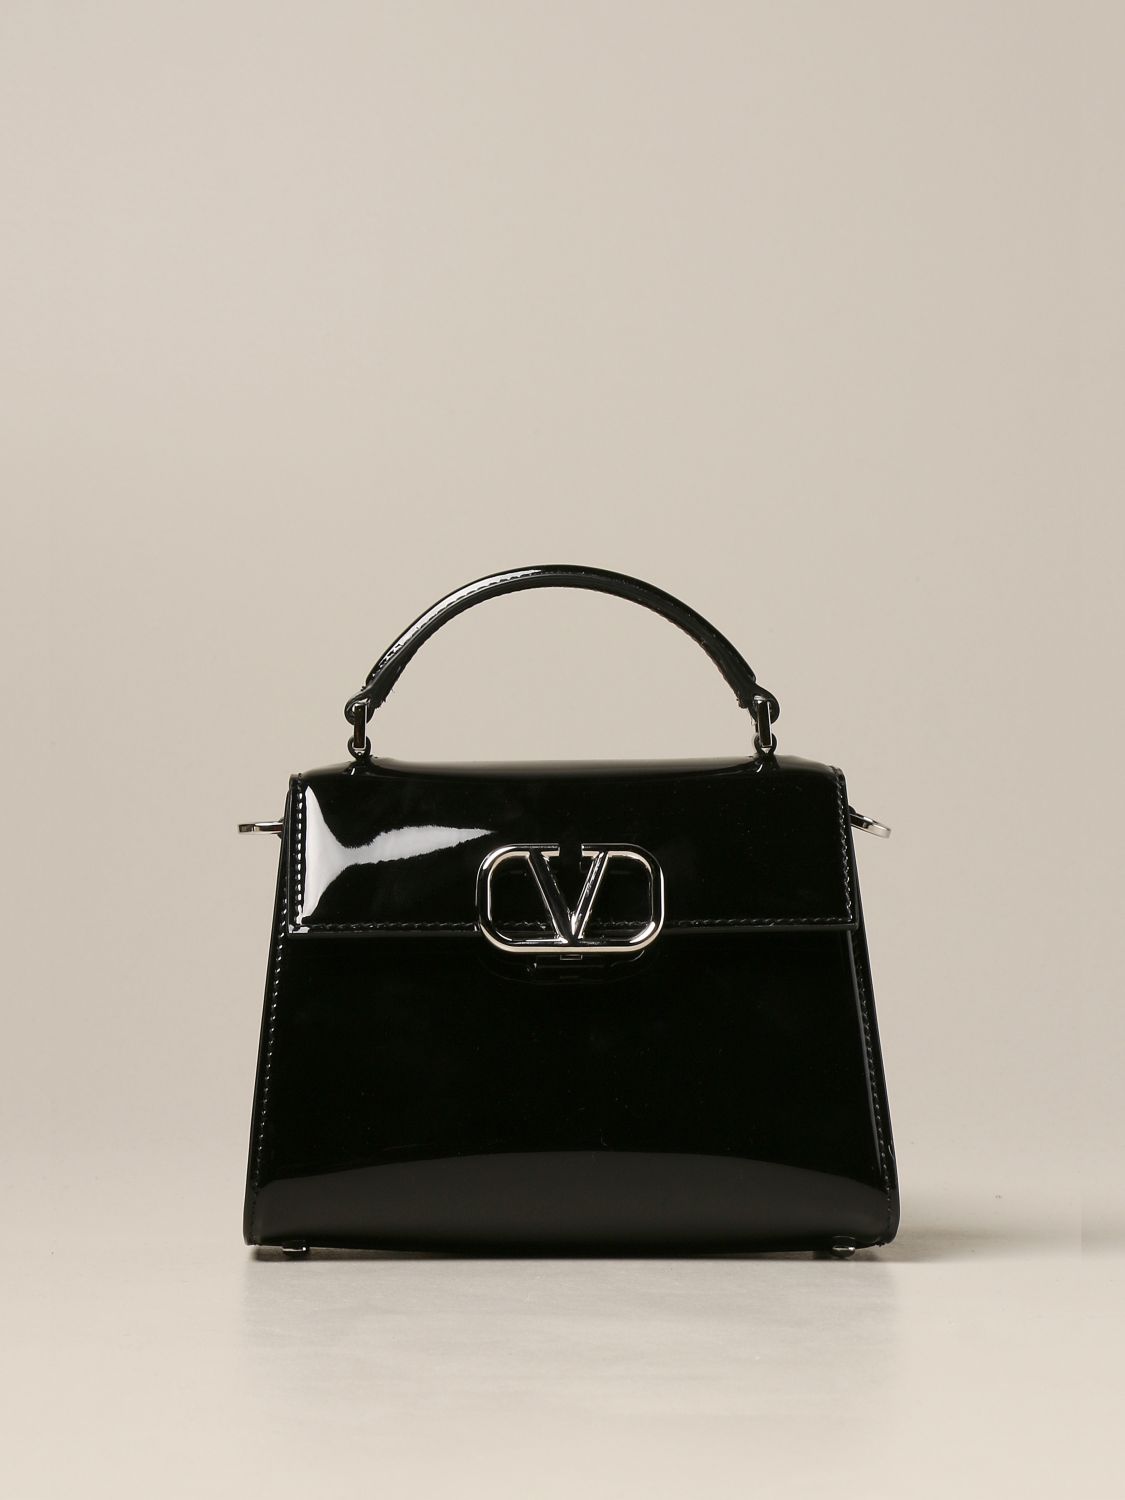 VALENTINO GARAVANI Black Patent Leather Handbag #29104 – ALL YOUR